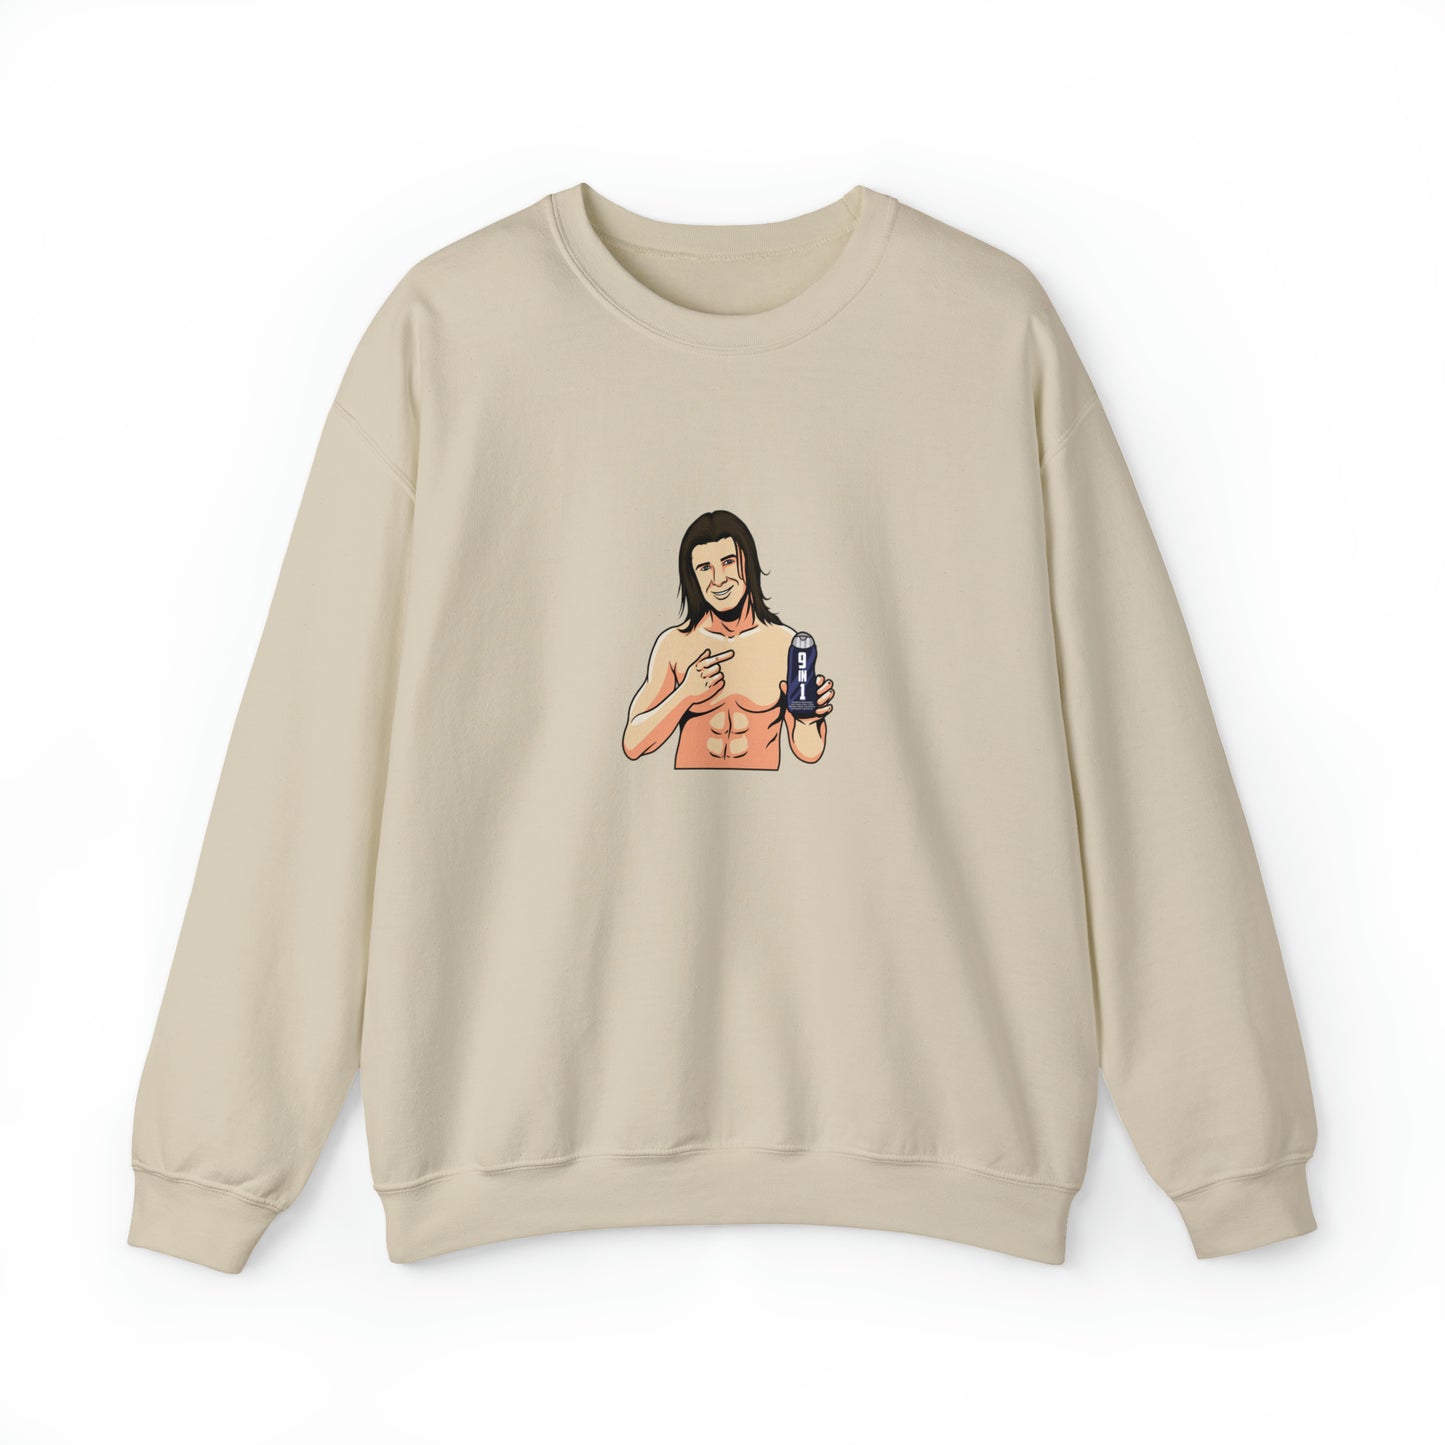 Custom Parody Crewneck Sweatshirt, 9 in 1 Design